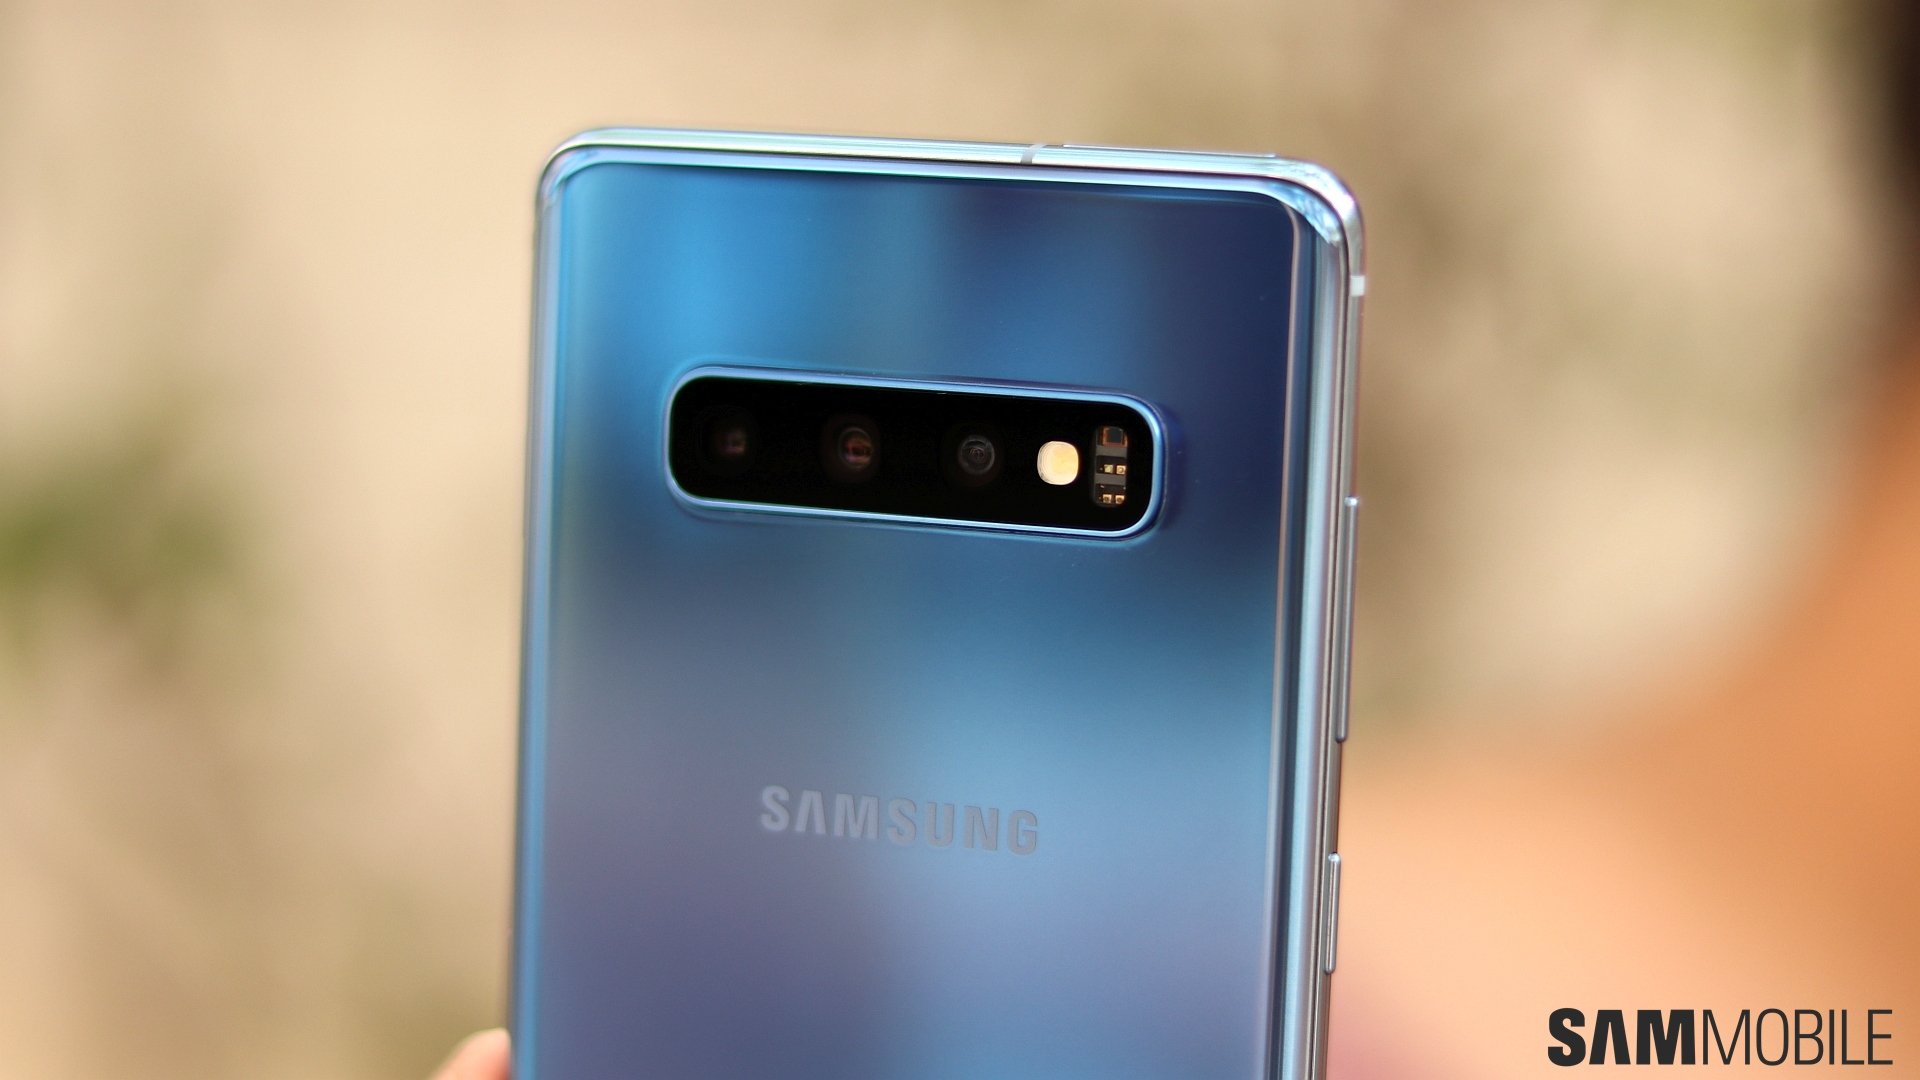 5G Samsung Galaxy Note 10 battery raises questions - SamMobile